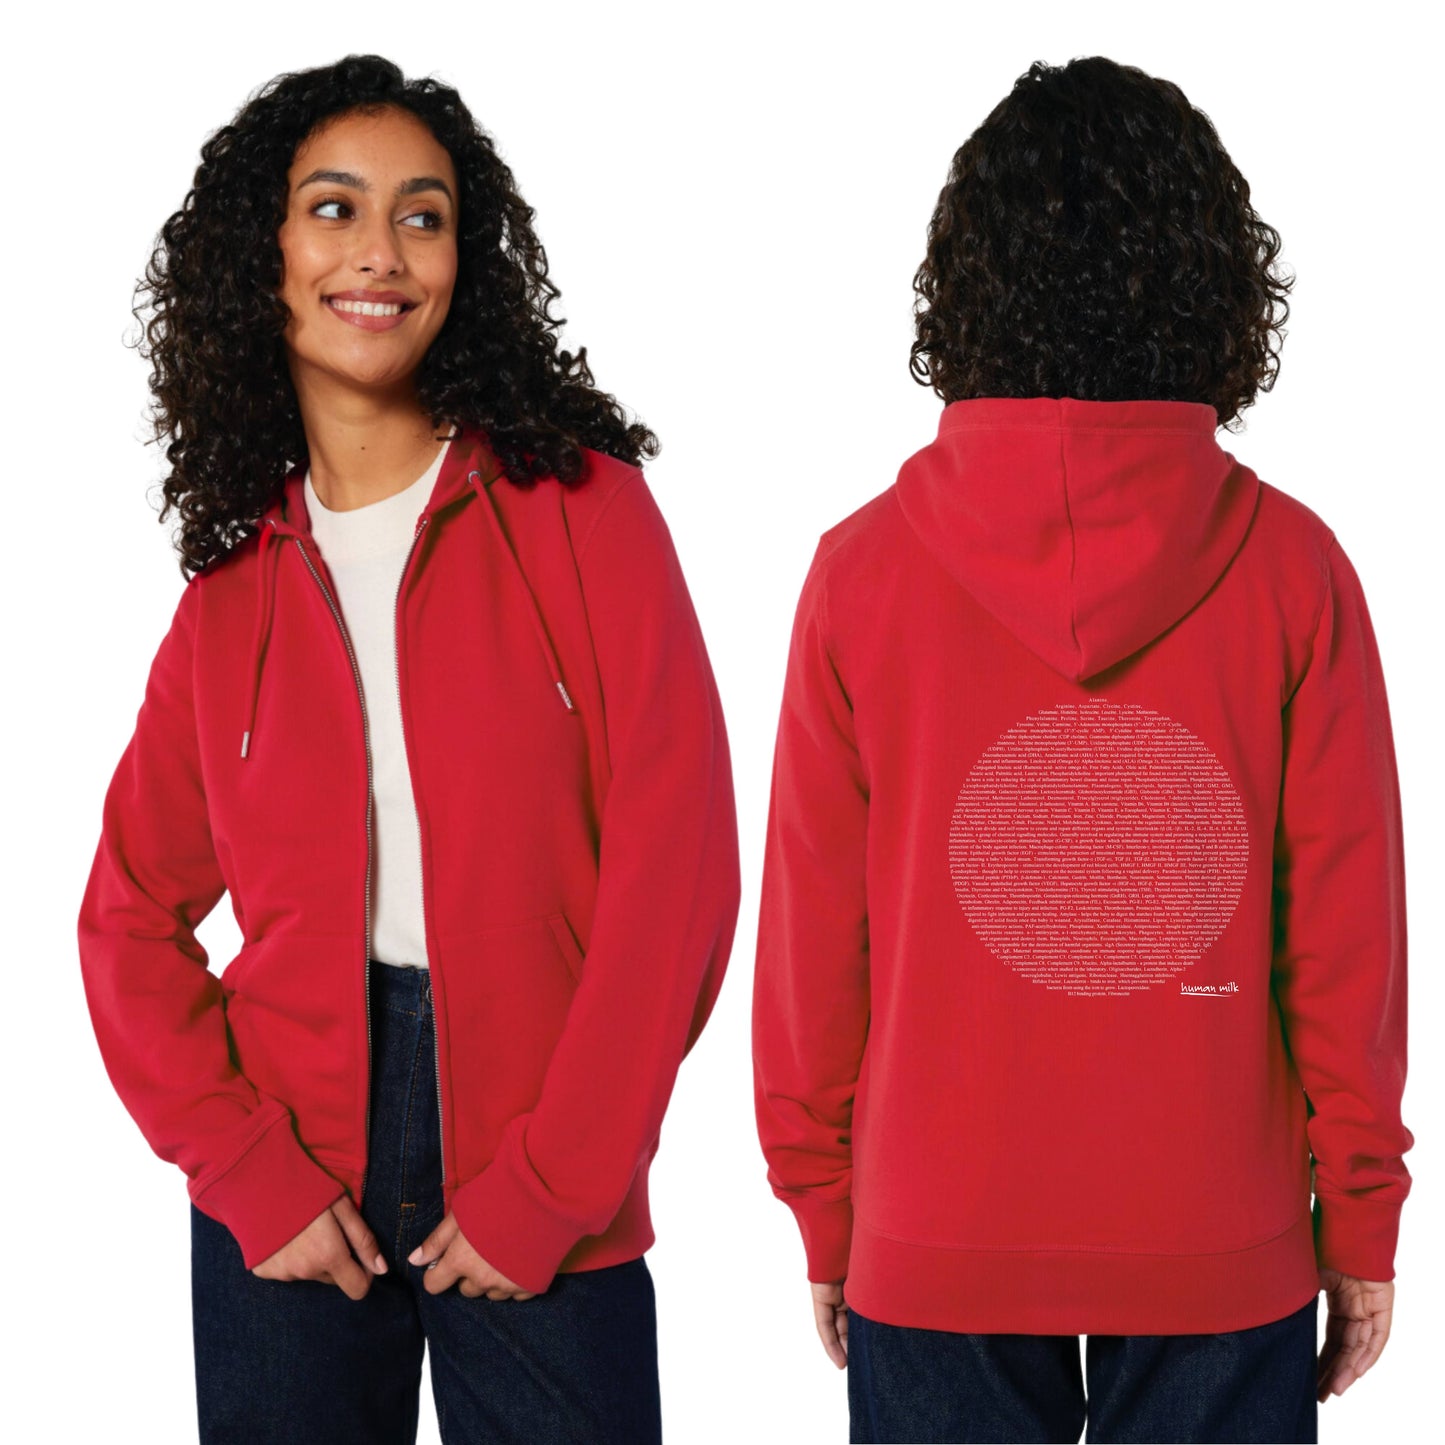 Moon zip hoodie. 4 colour options